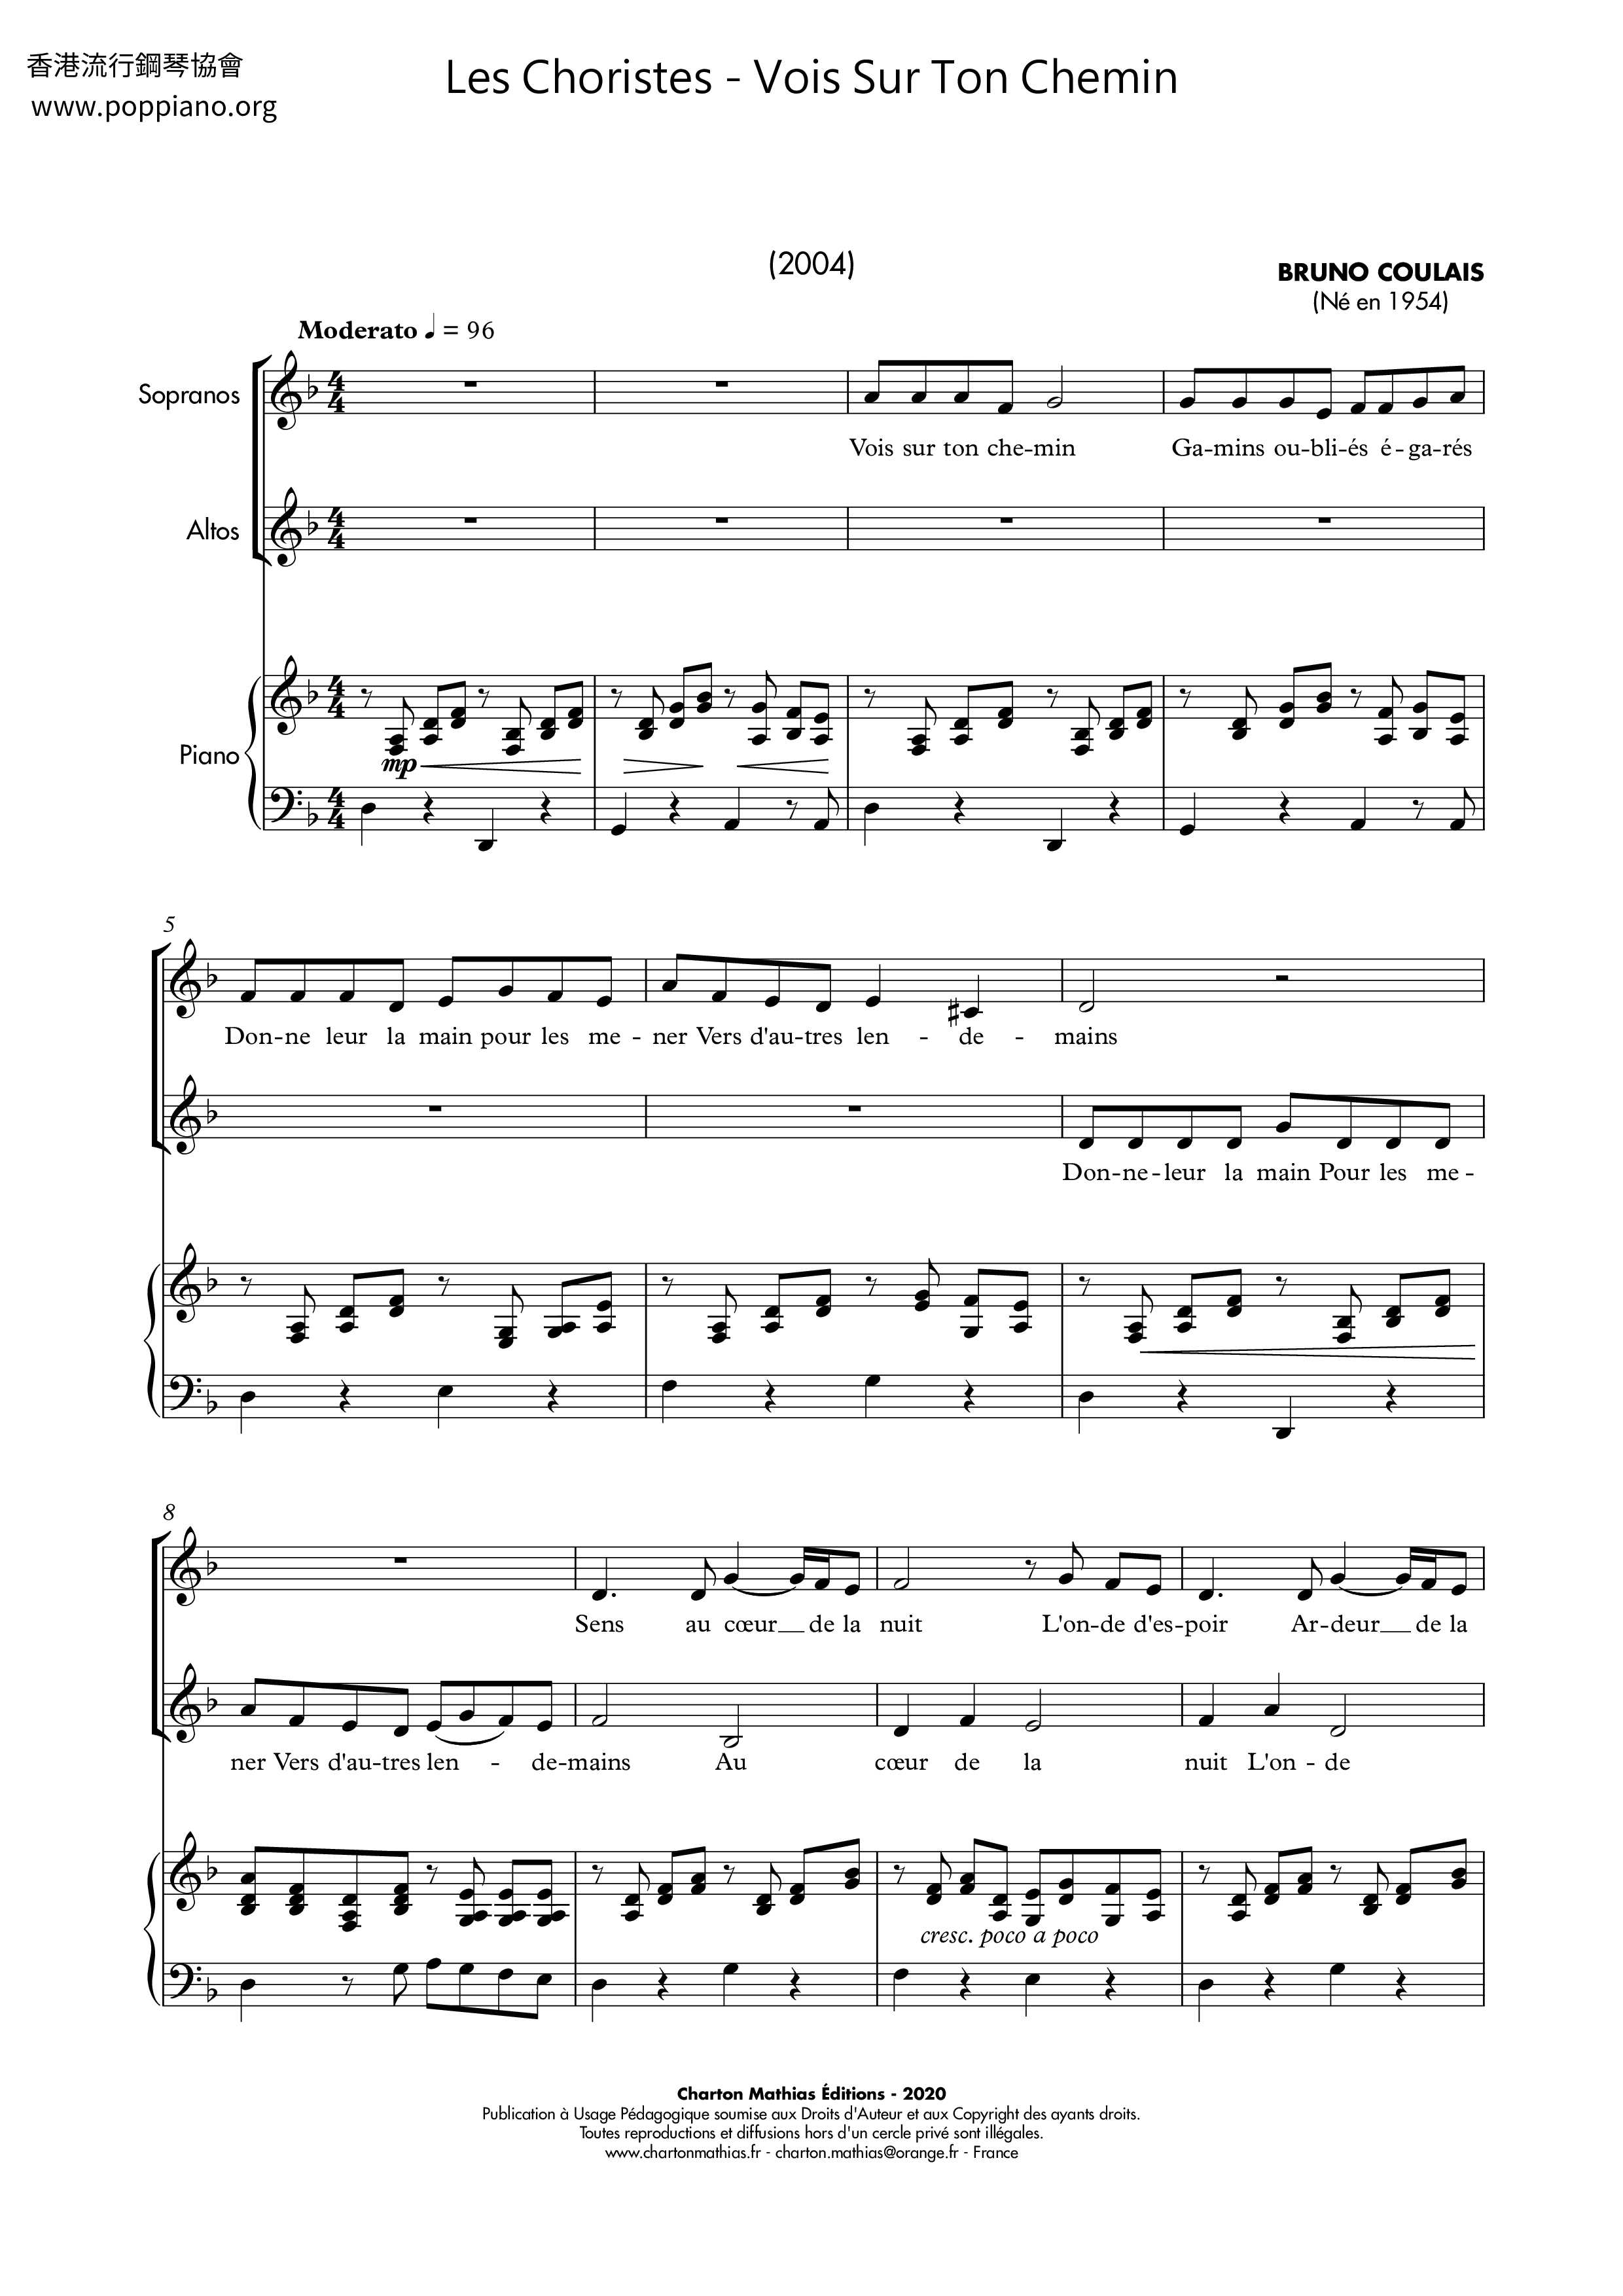 ☆ Les Choristes-Vois Sur Ton Chemin Sheet Music pdf, - Free Score Download ☆